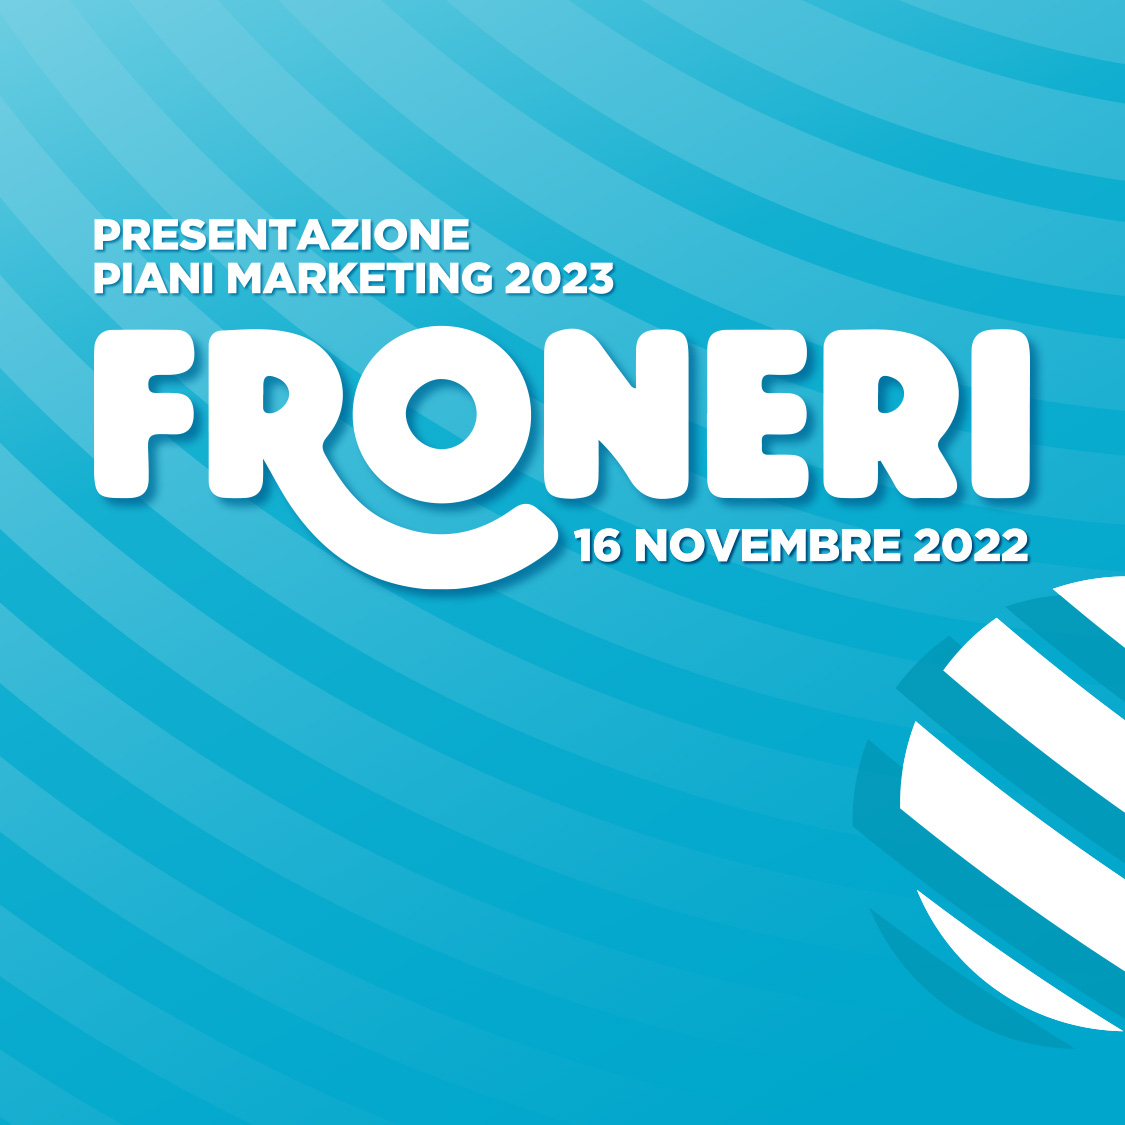 Froneri Piani Marketing 2023